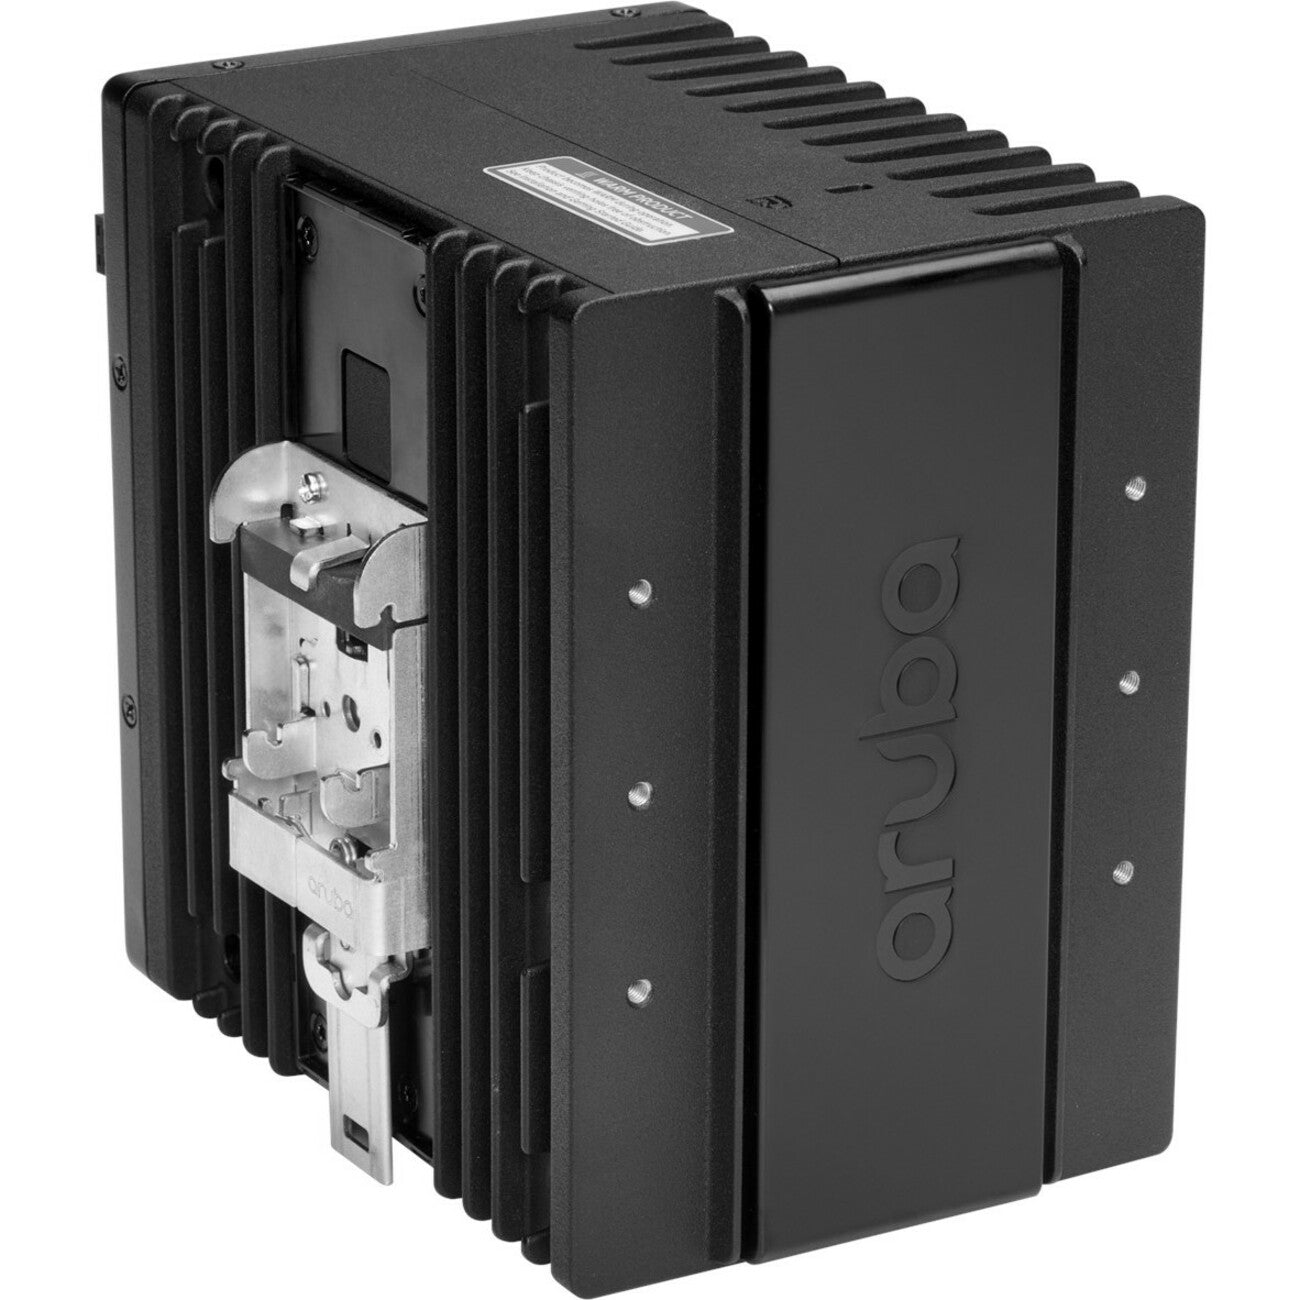 Aruba JL817A CX 4100i Ethernet Switch 12-Port 1GbE Gigabit Ethernet 10 Gigabit Ethernet PoE+ PoE++ 2x SFP+ Slots